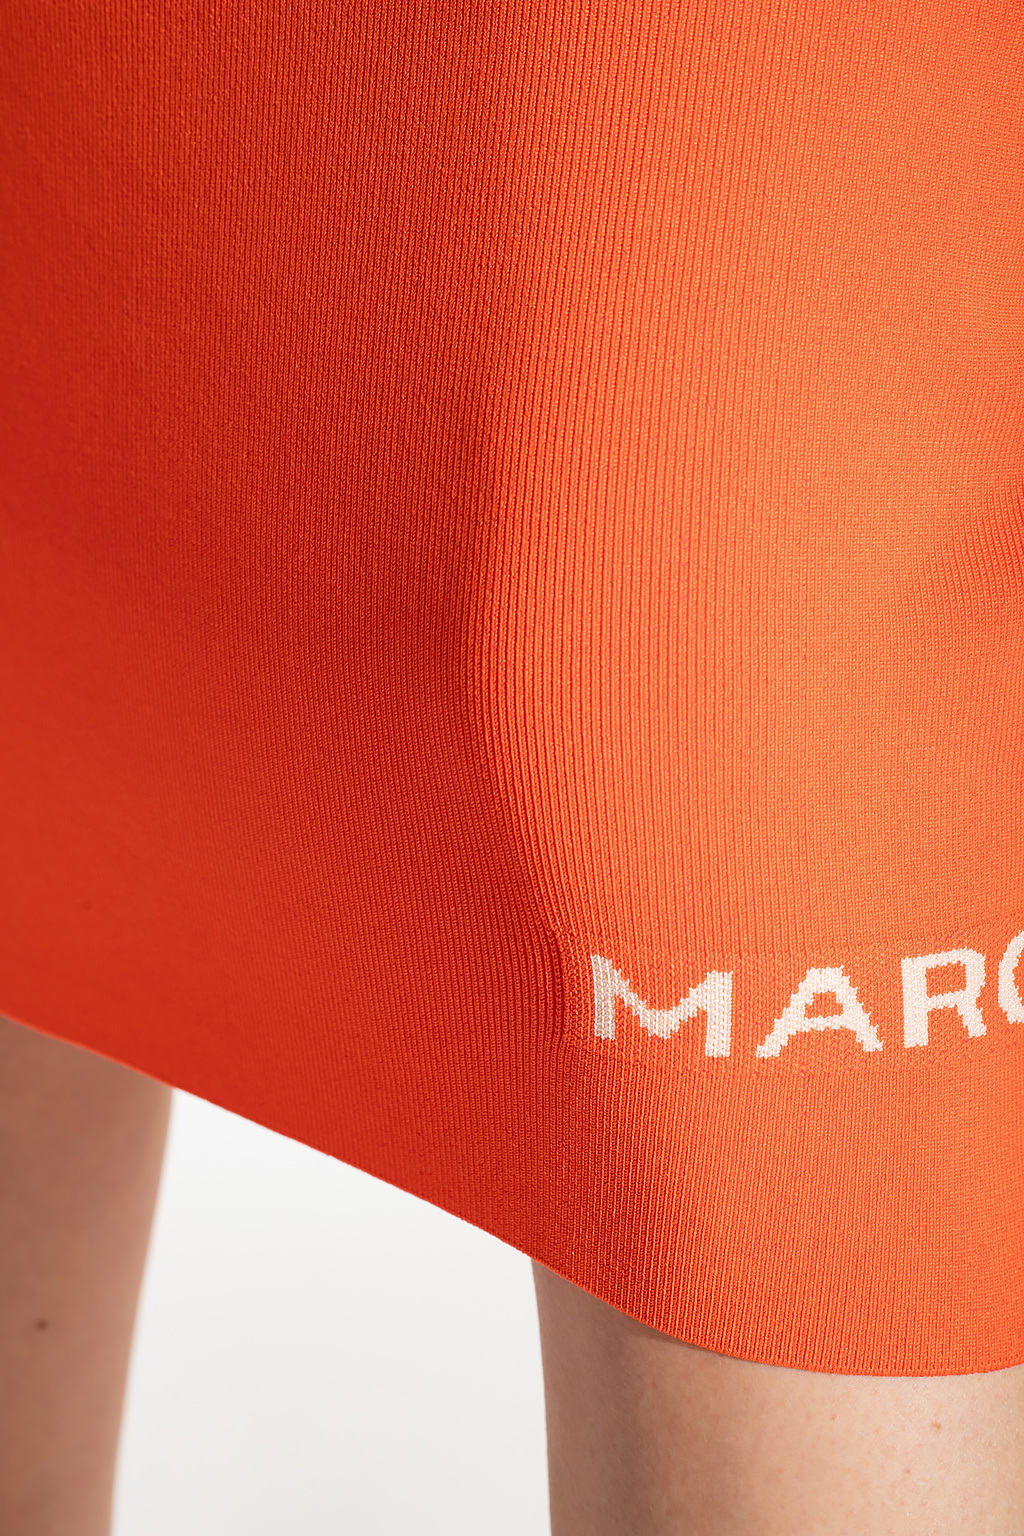 Marc Jacobs Маленька сумка в стилі marc jacobs брендова упаковка